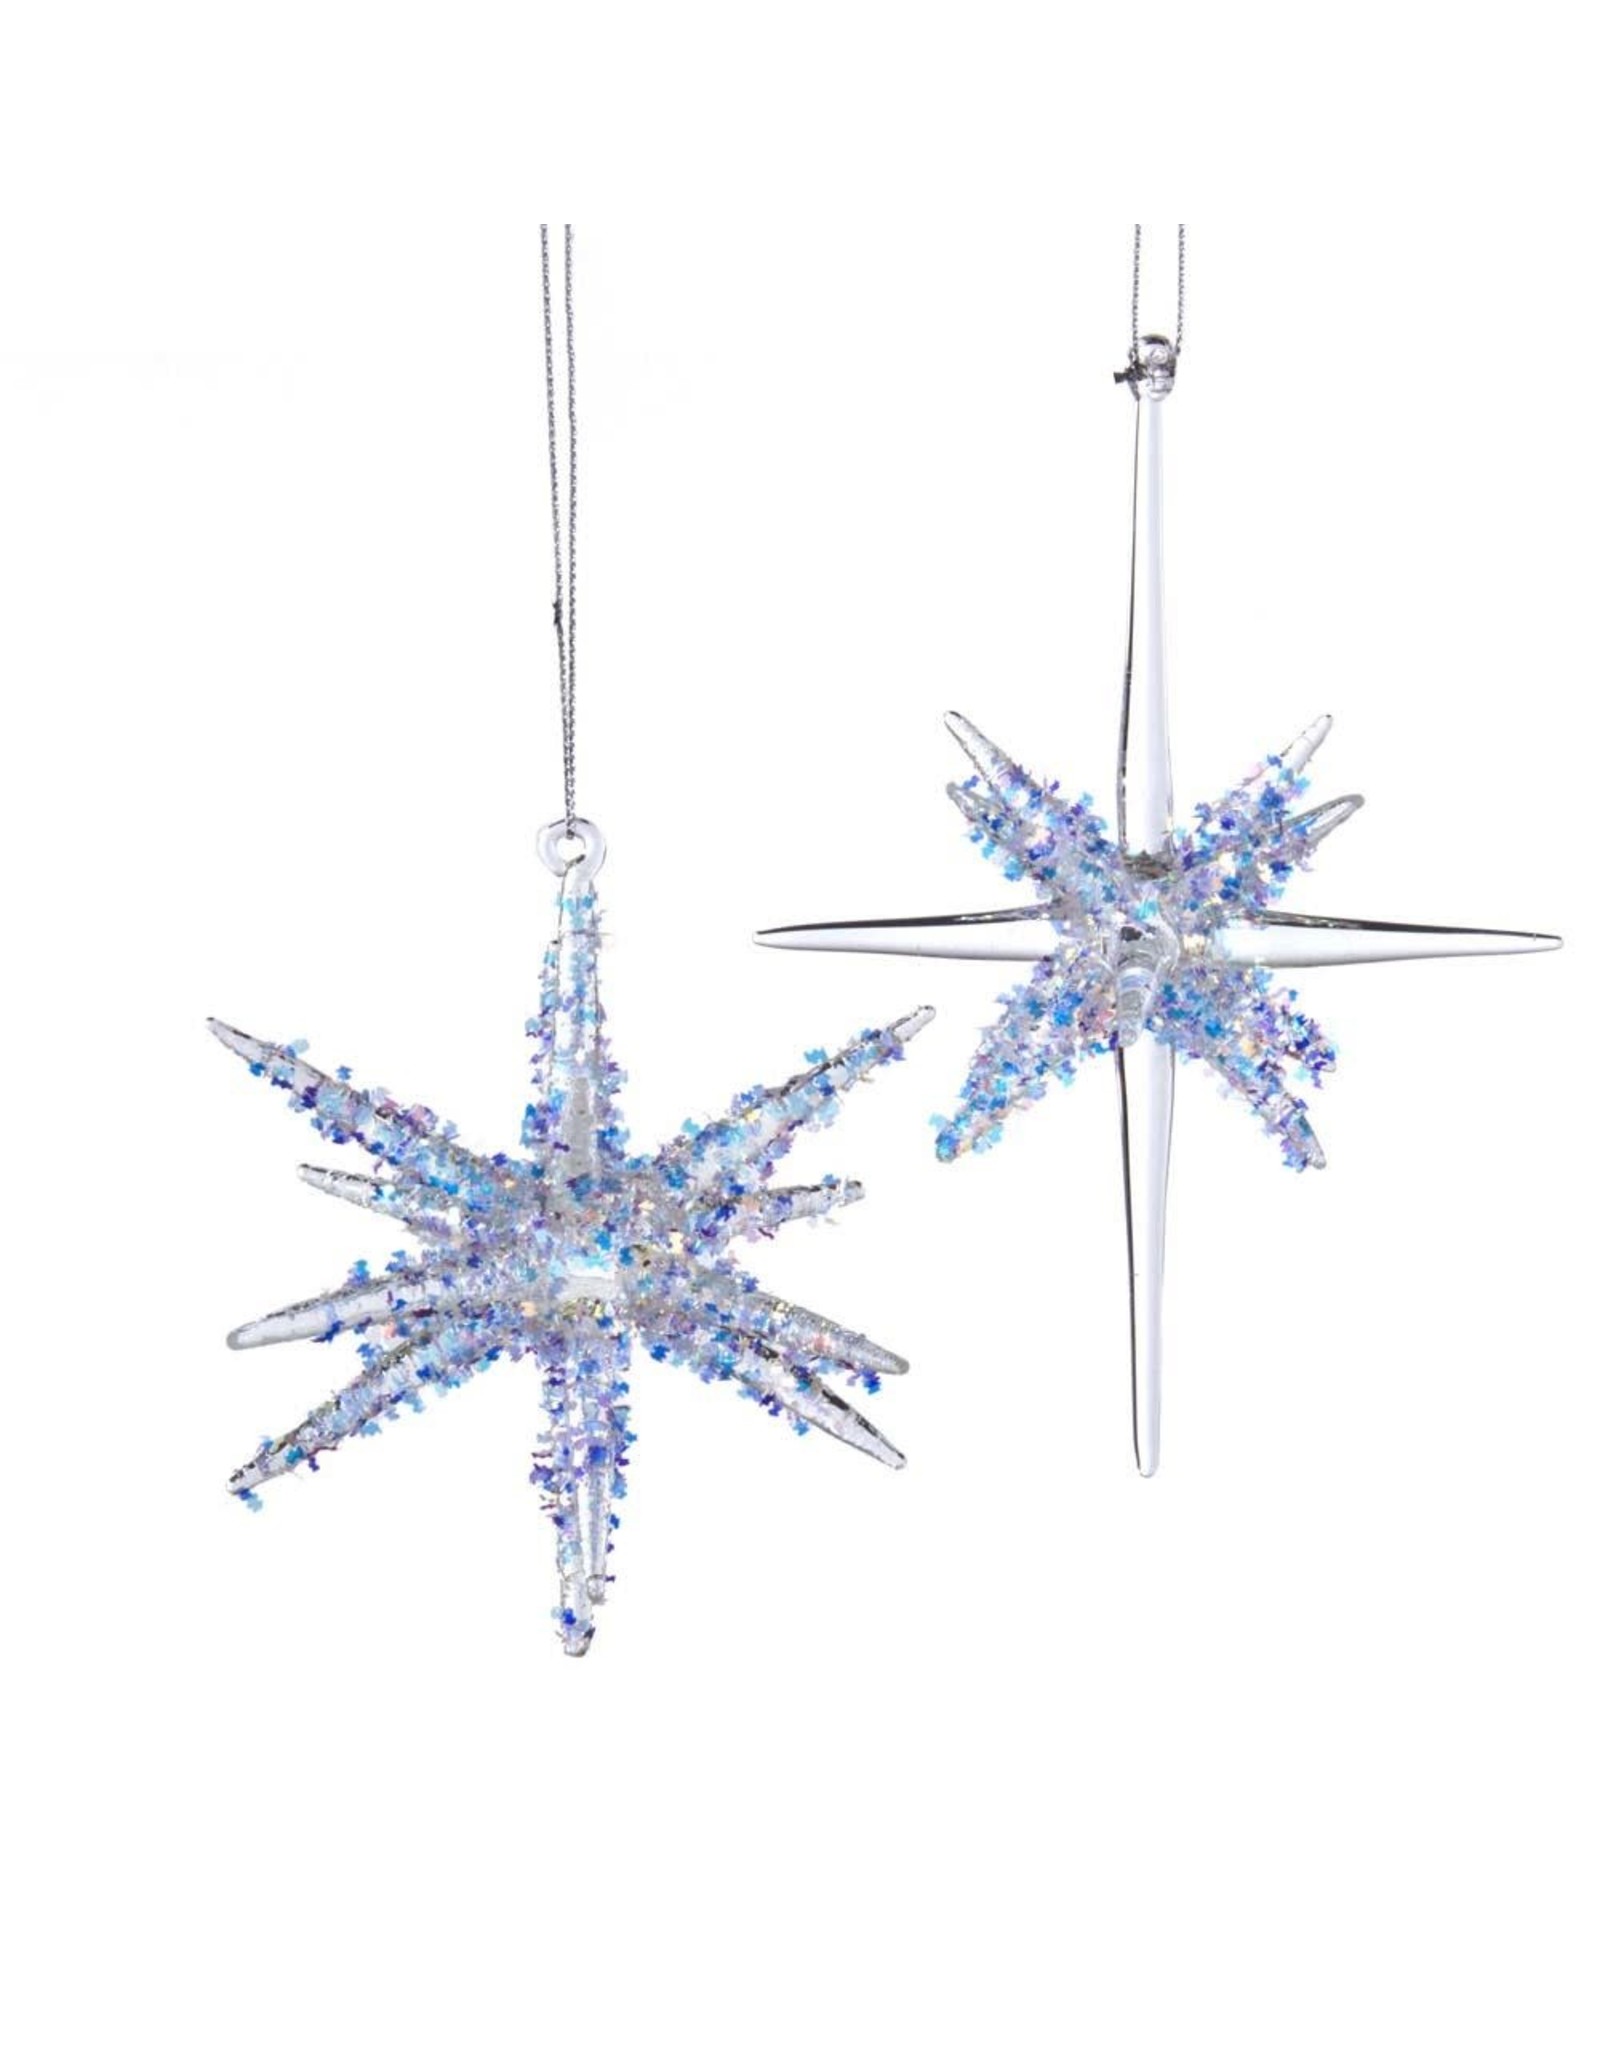 Kurt Adler Glass Star Bursts With Glitter Ornaments 2 Assorted